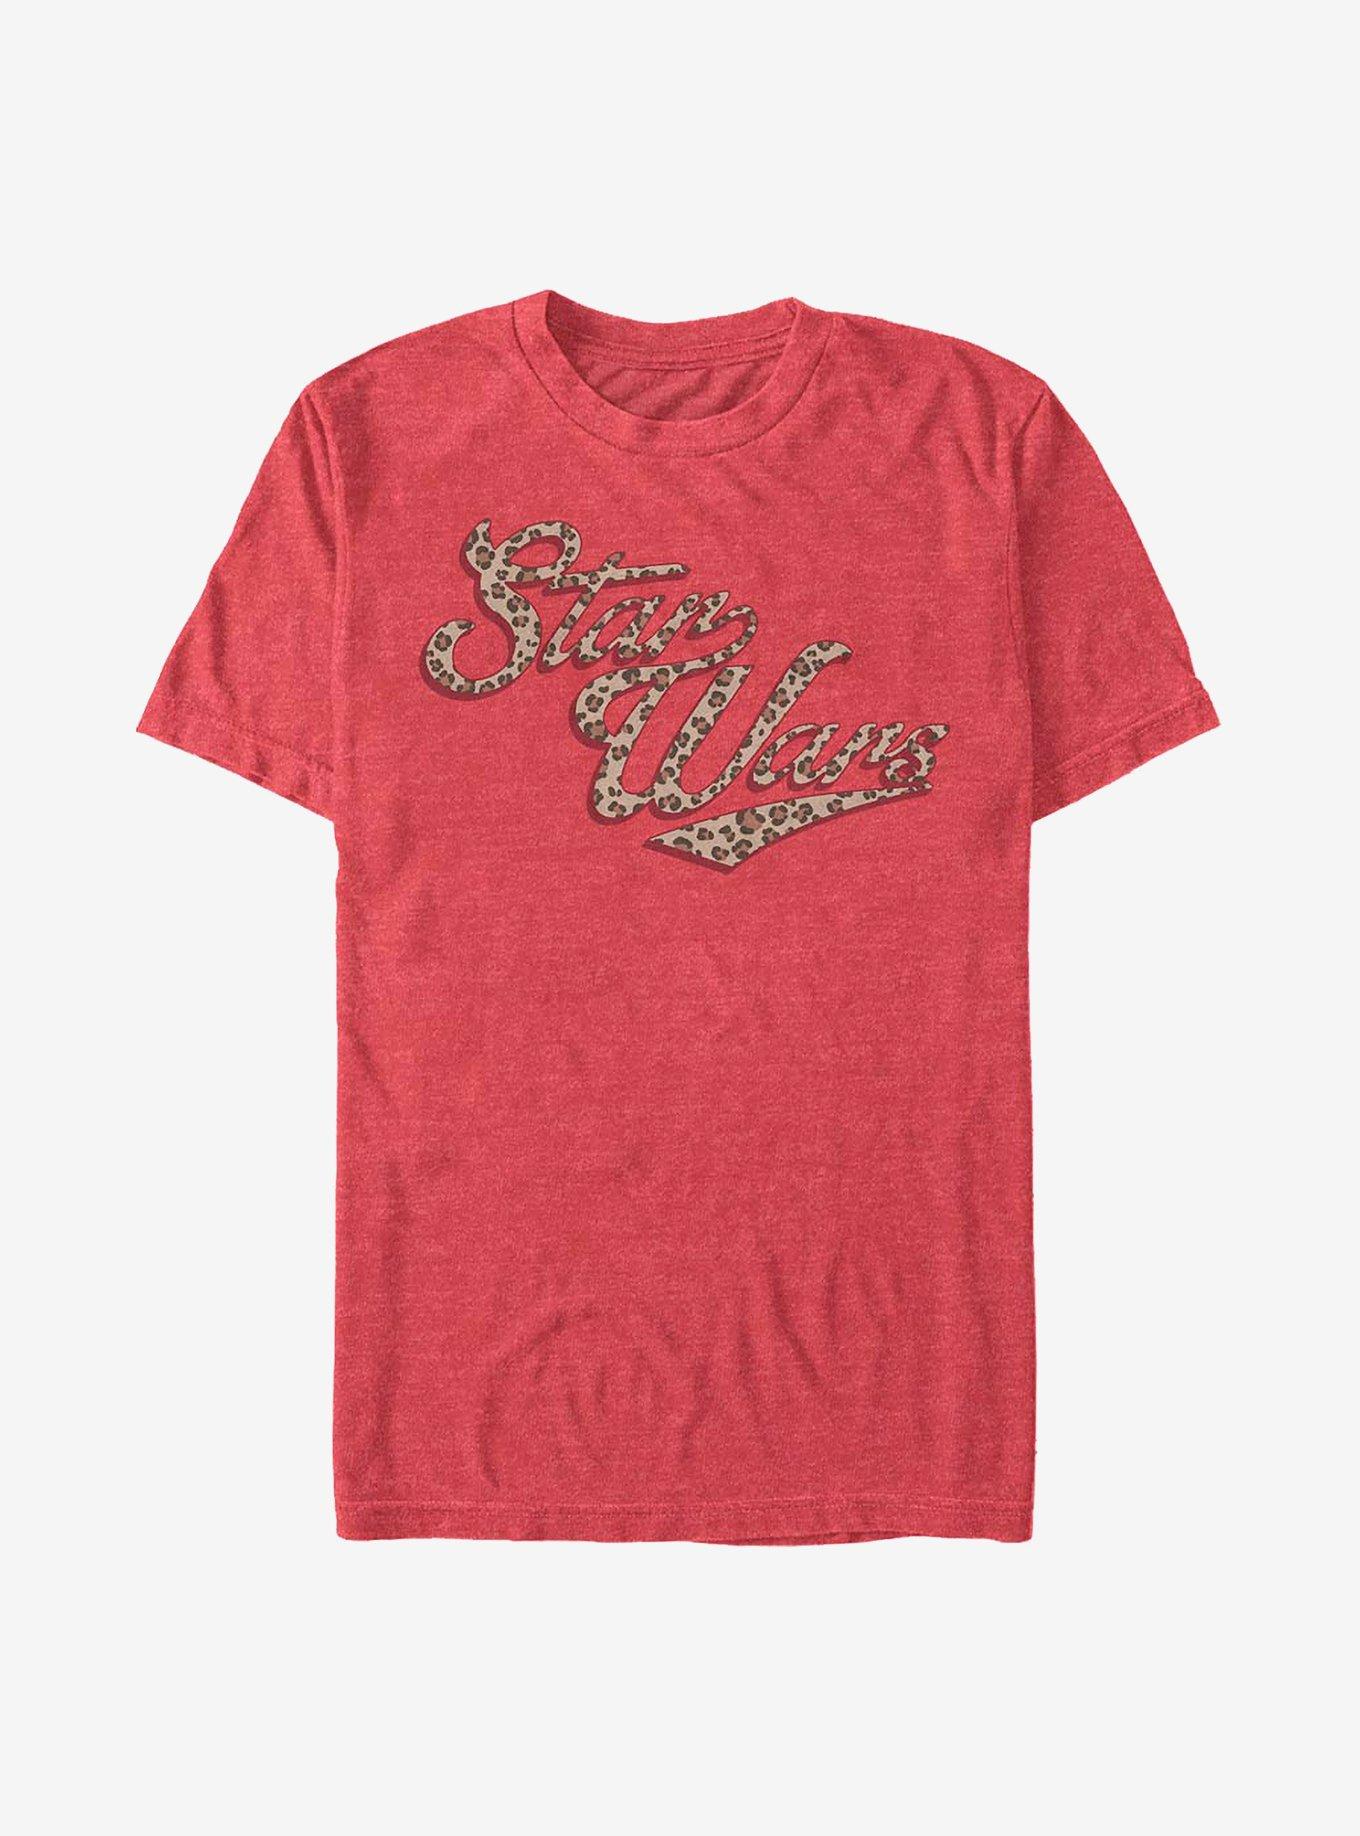 Star Wars Cheetah Star Wars T-Shirt, RED HTR, hi-res